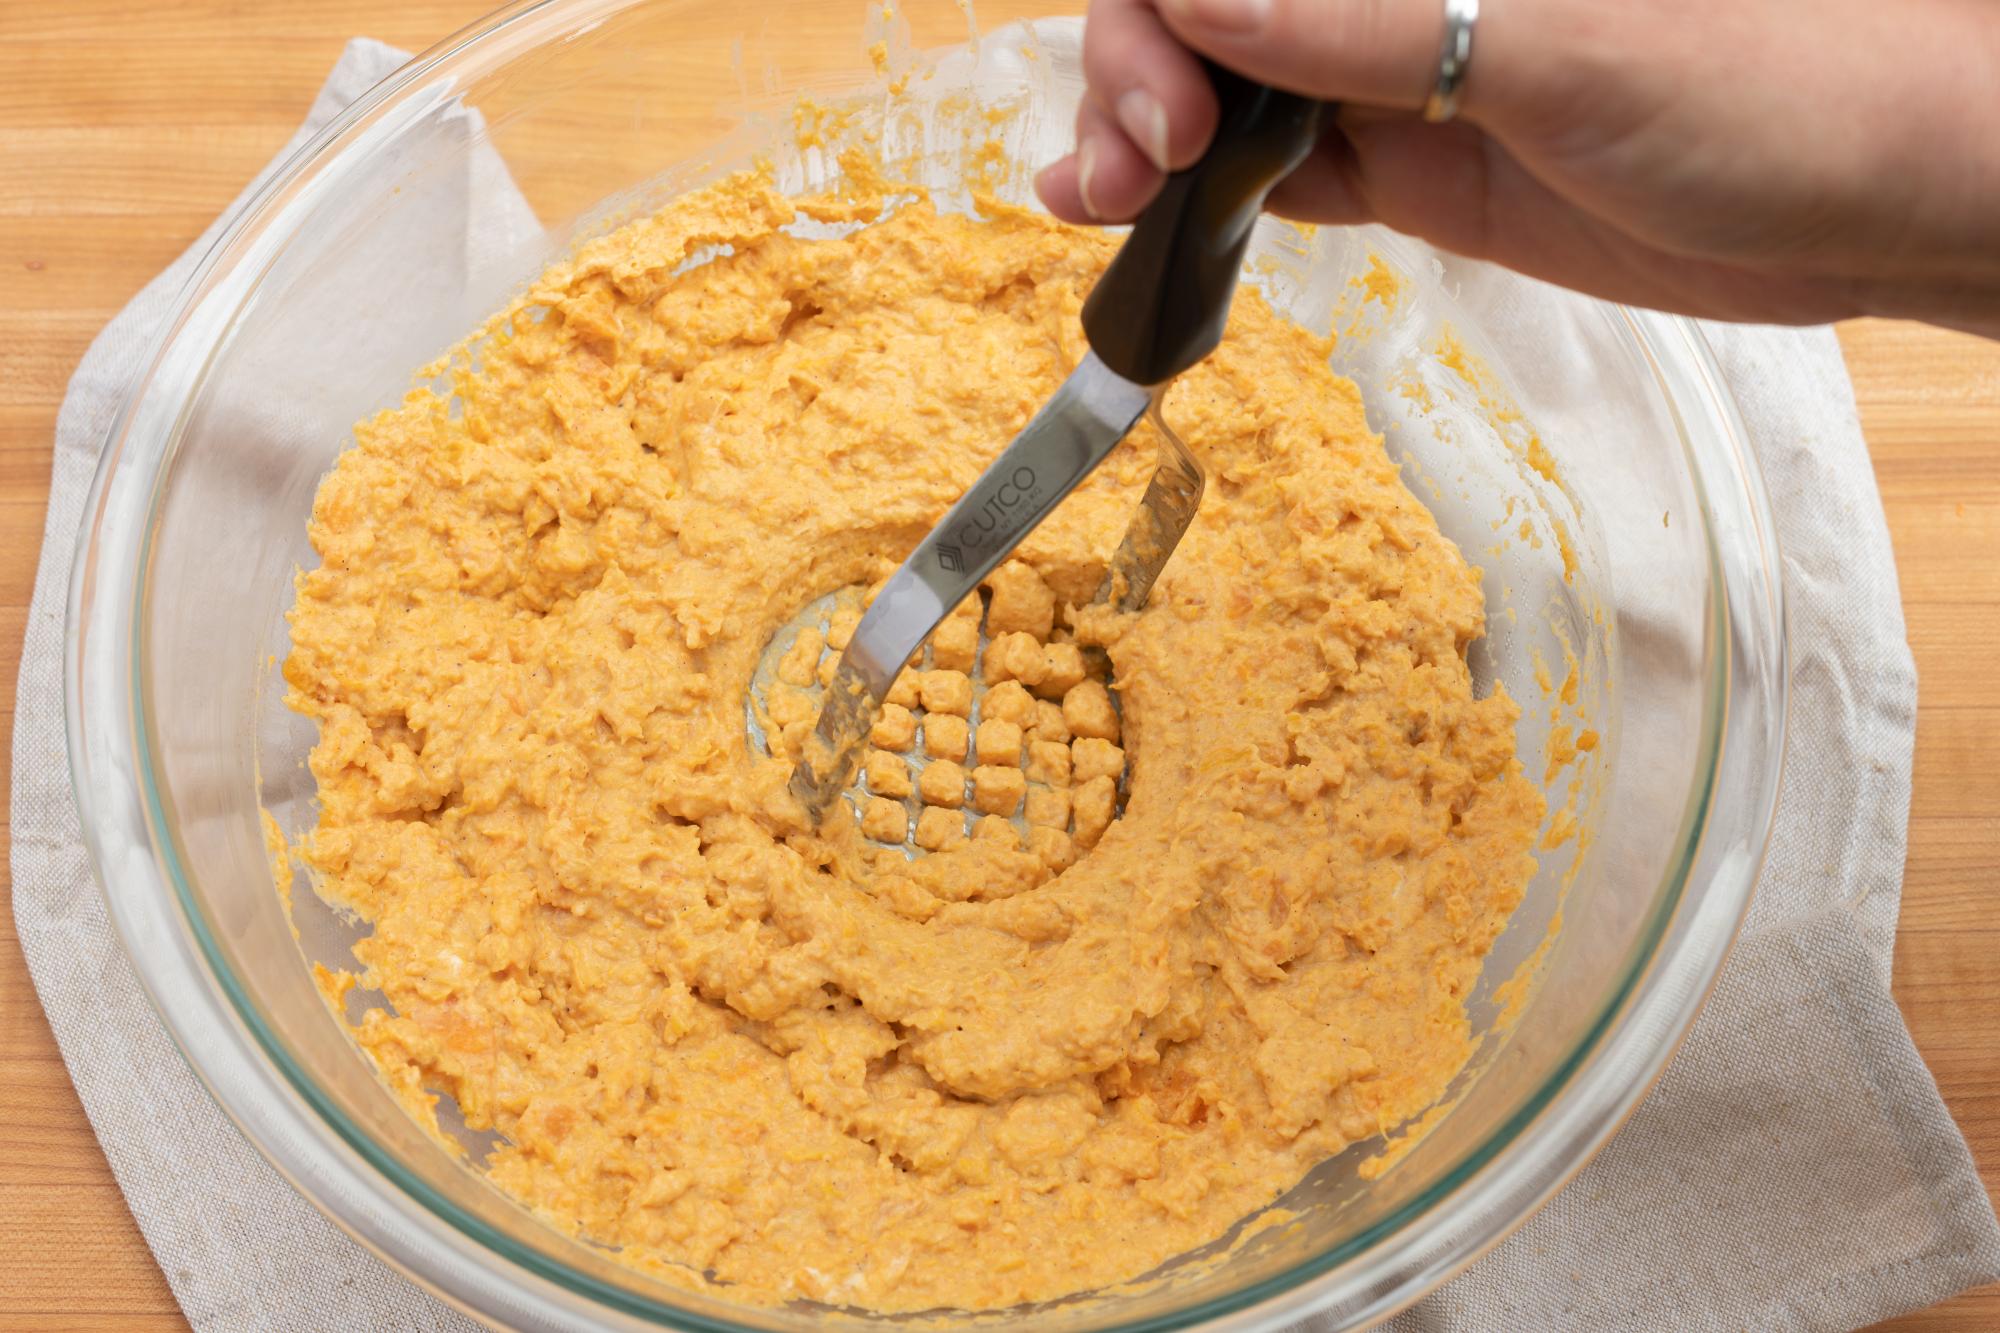 Using the Potato Masher to mash the ingredients.